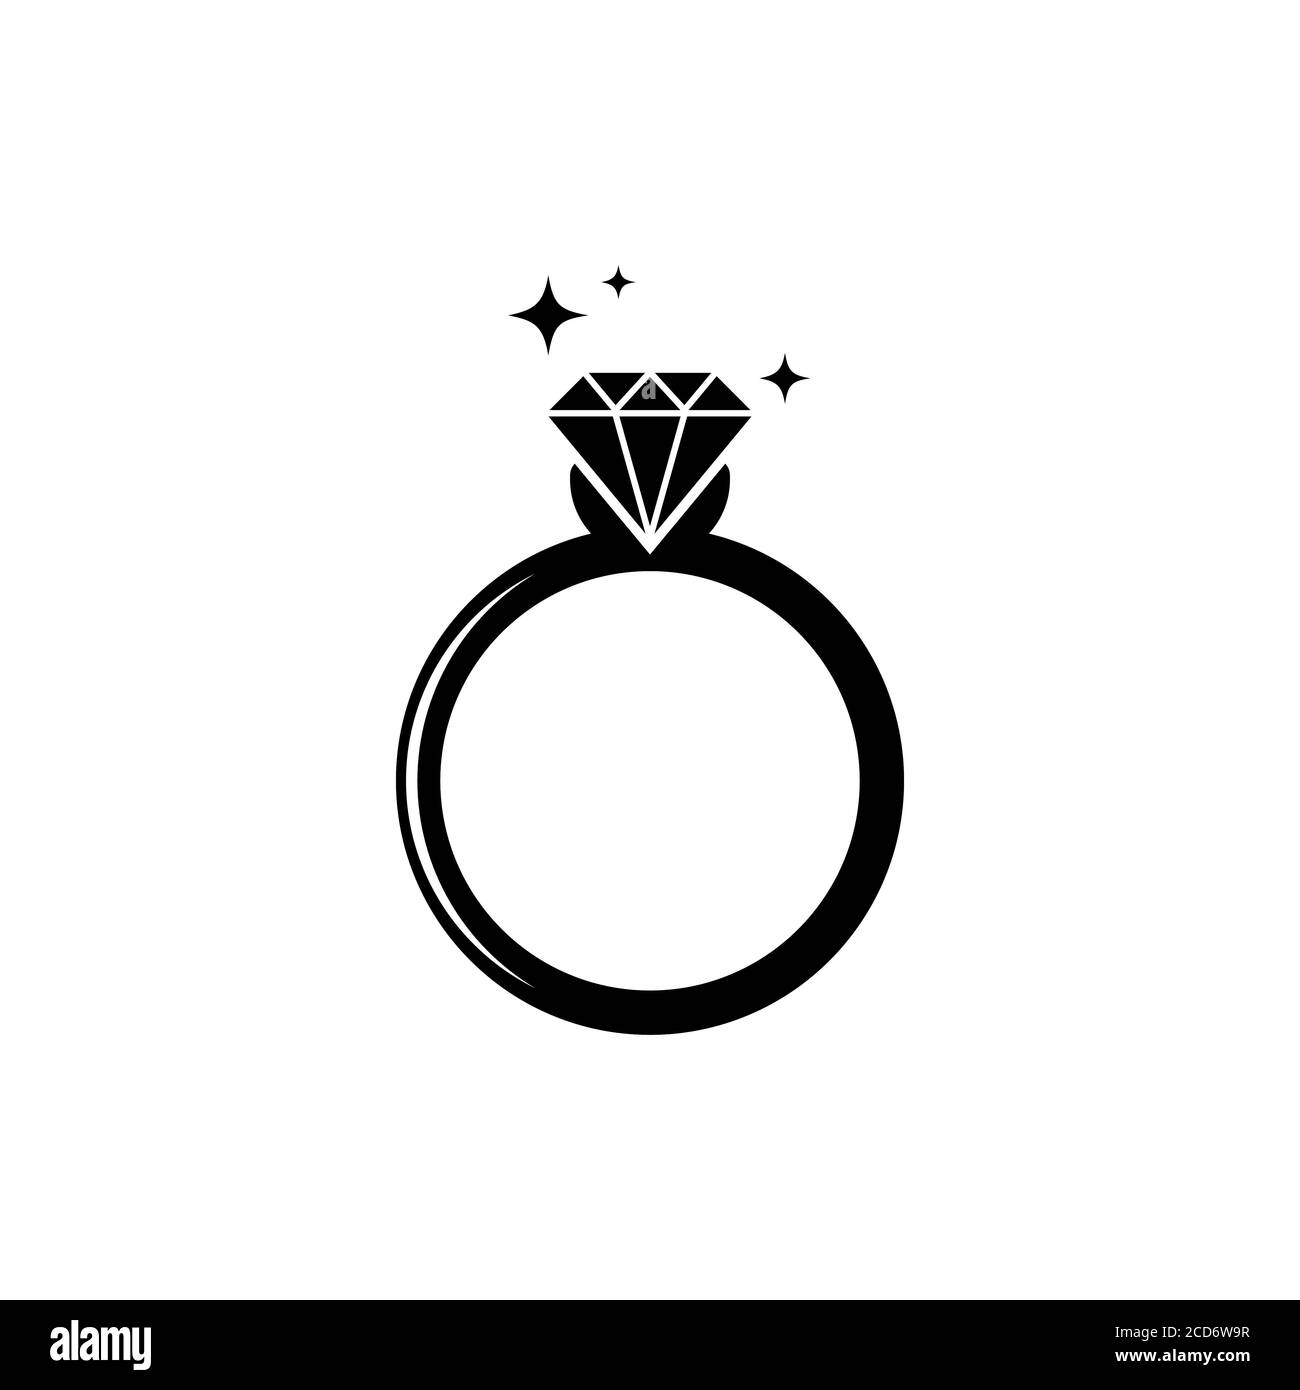 Sentence, vinyl, marriage proposal, Proposal, engagement Ring, engagement,  romance, marriage, public Relations, Conversation | Anyrgb